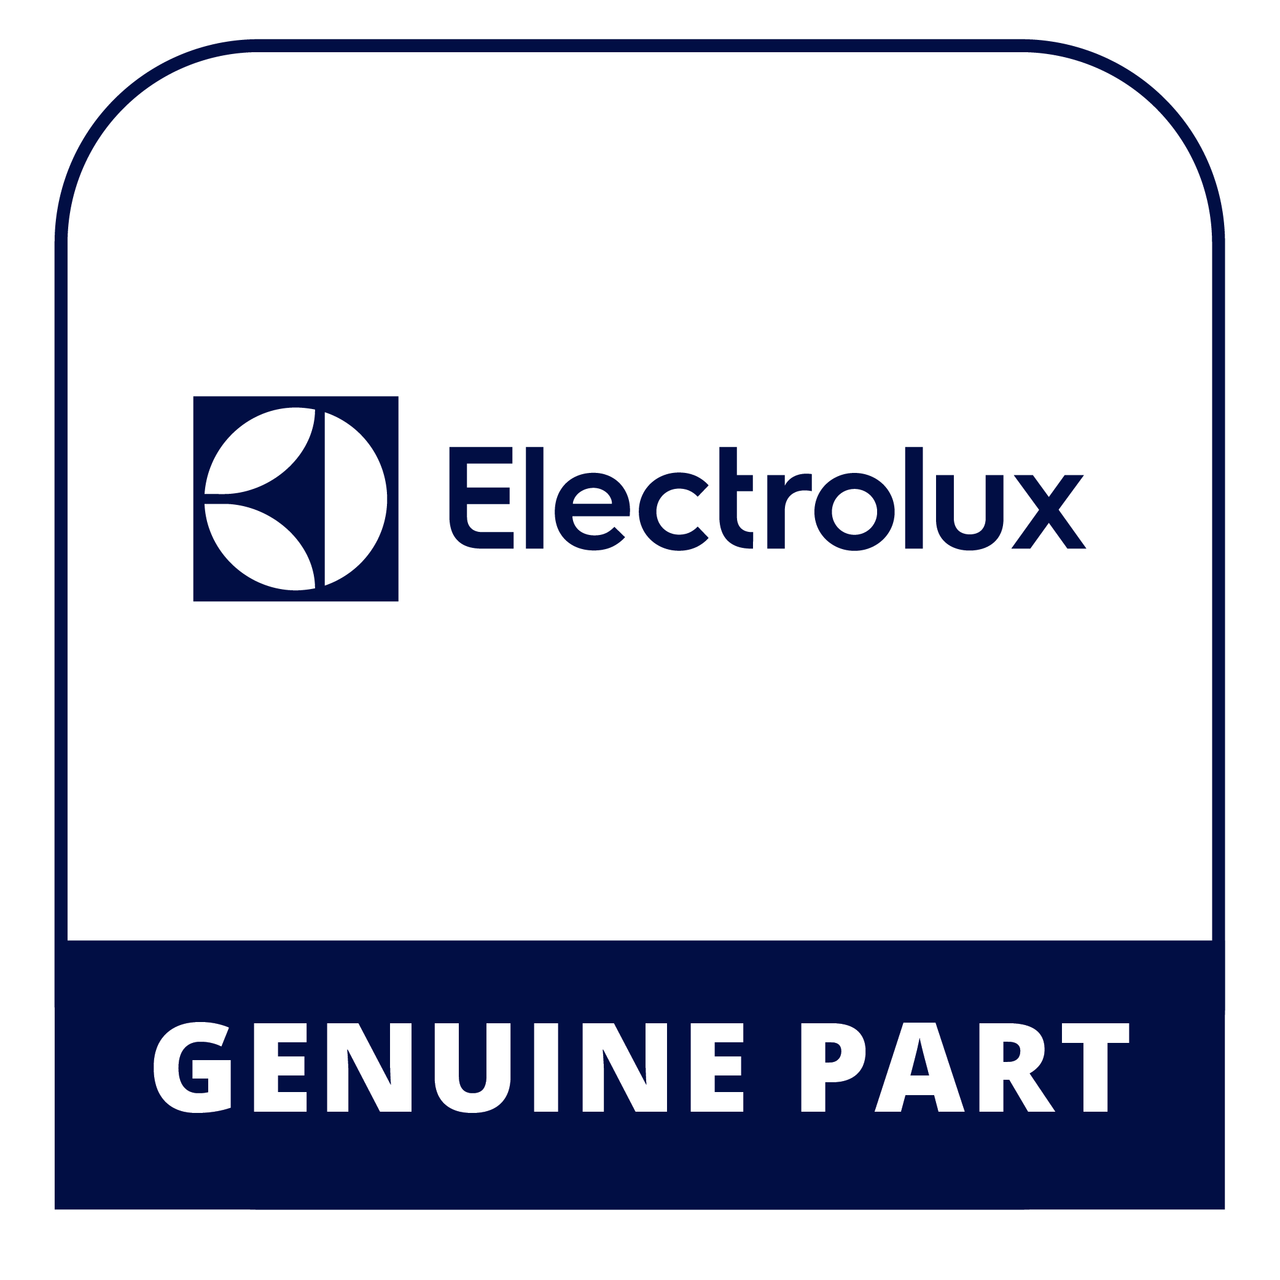 Frigidaire - Electrolux 139027809 Shield - Genuine Electrolux Part